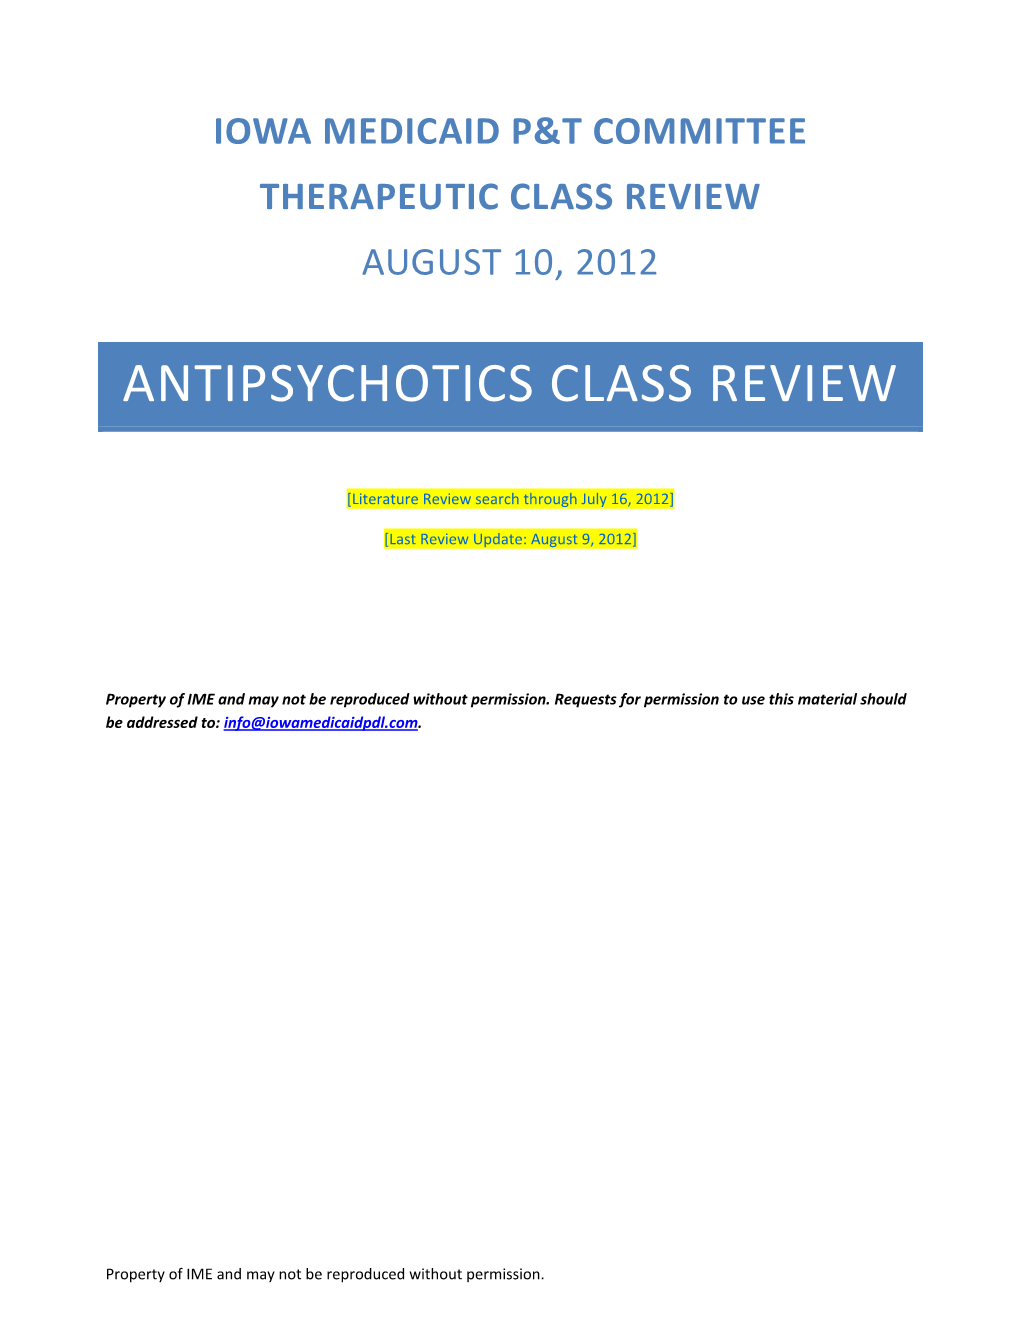 Antipsychotic Class Review